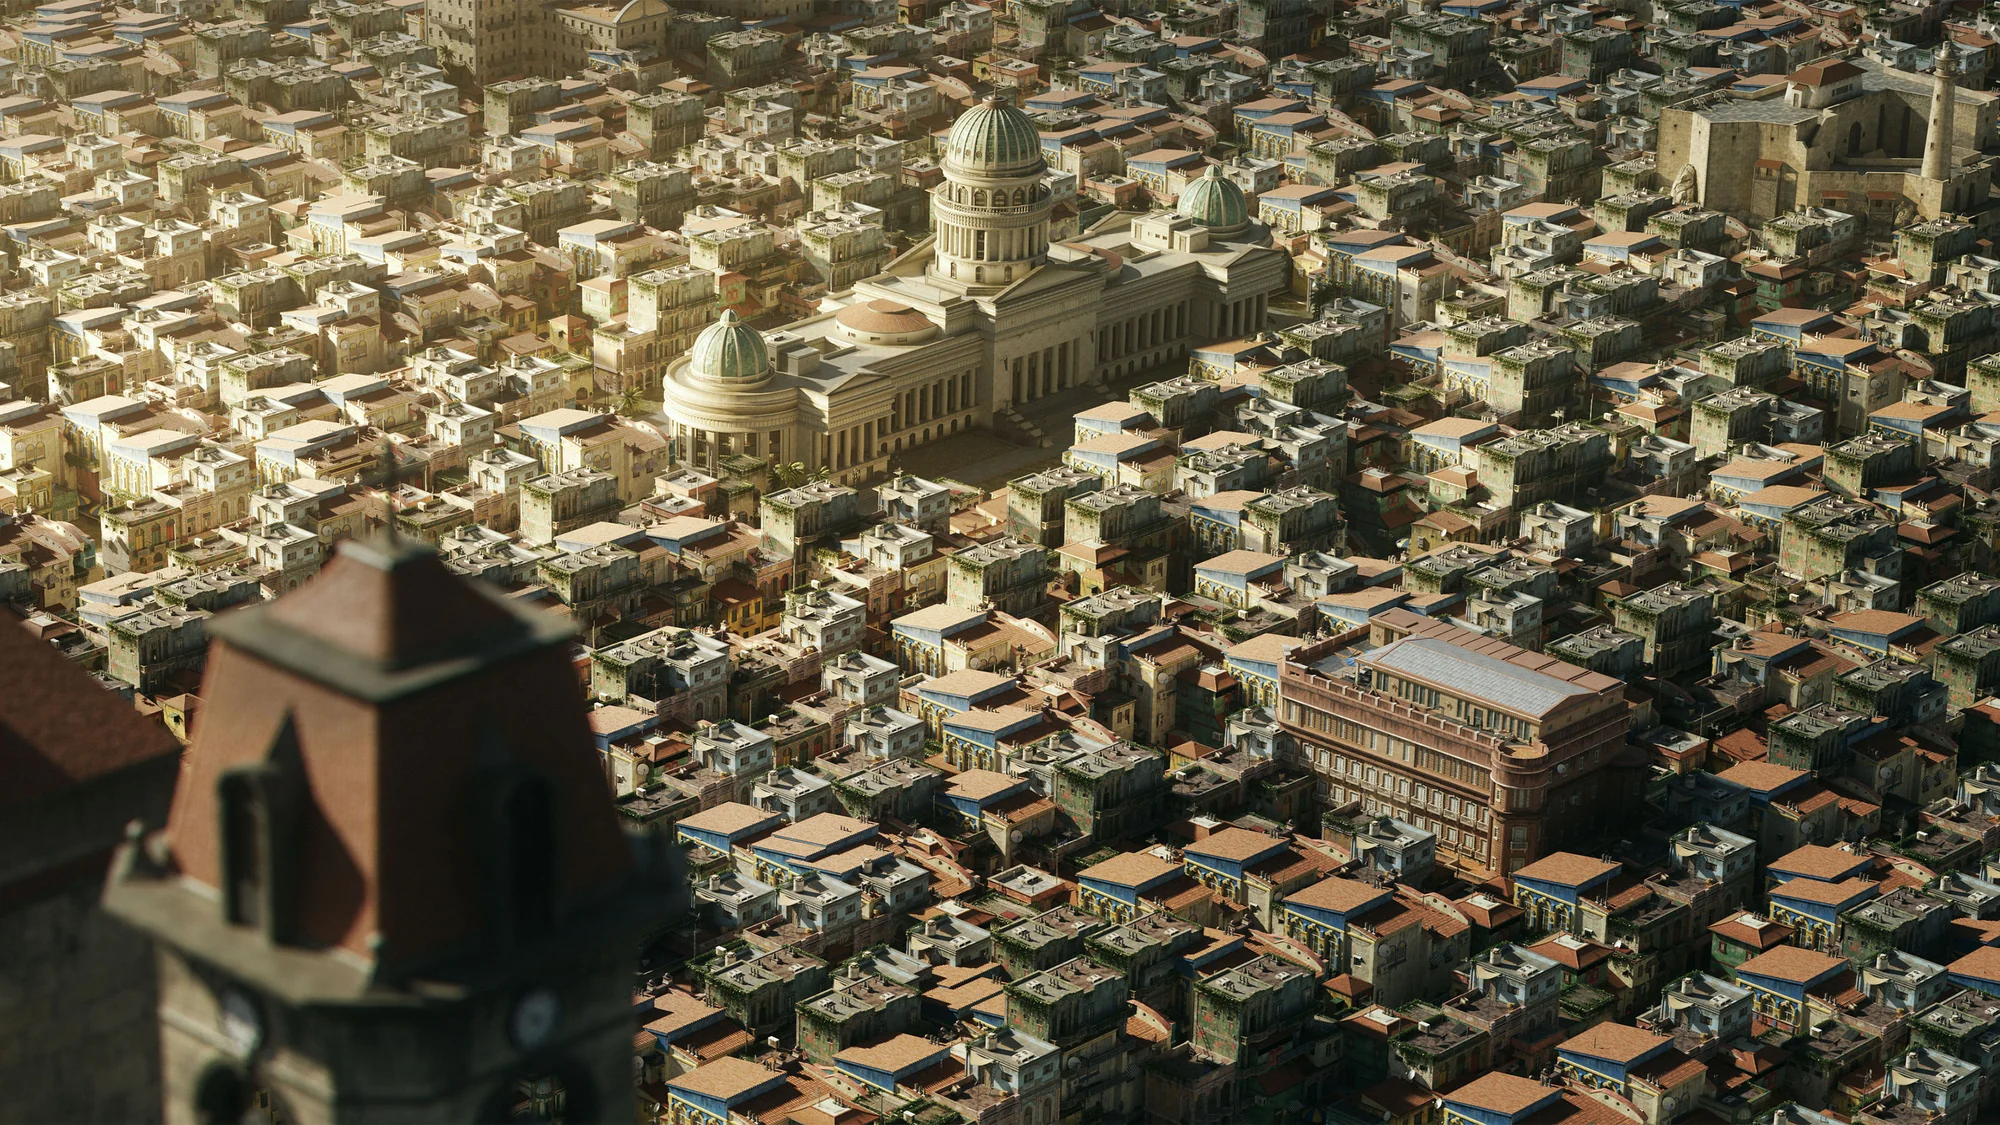 3D模型-古巴异域风格城市建筑楼房模型 Havana Nights （C4D/Blender/FBX/OBJ格式）3D模型、素材